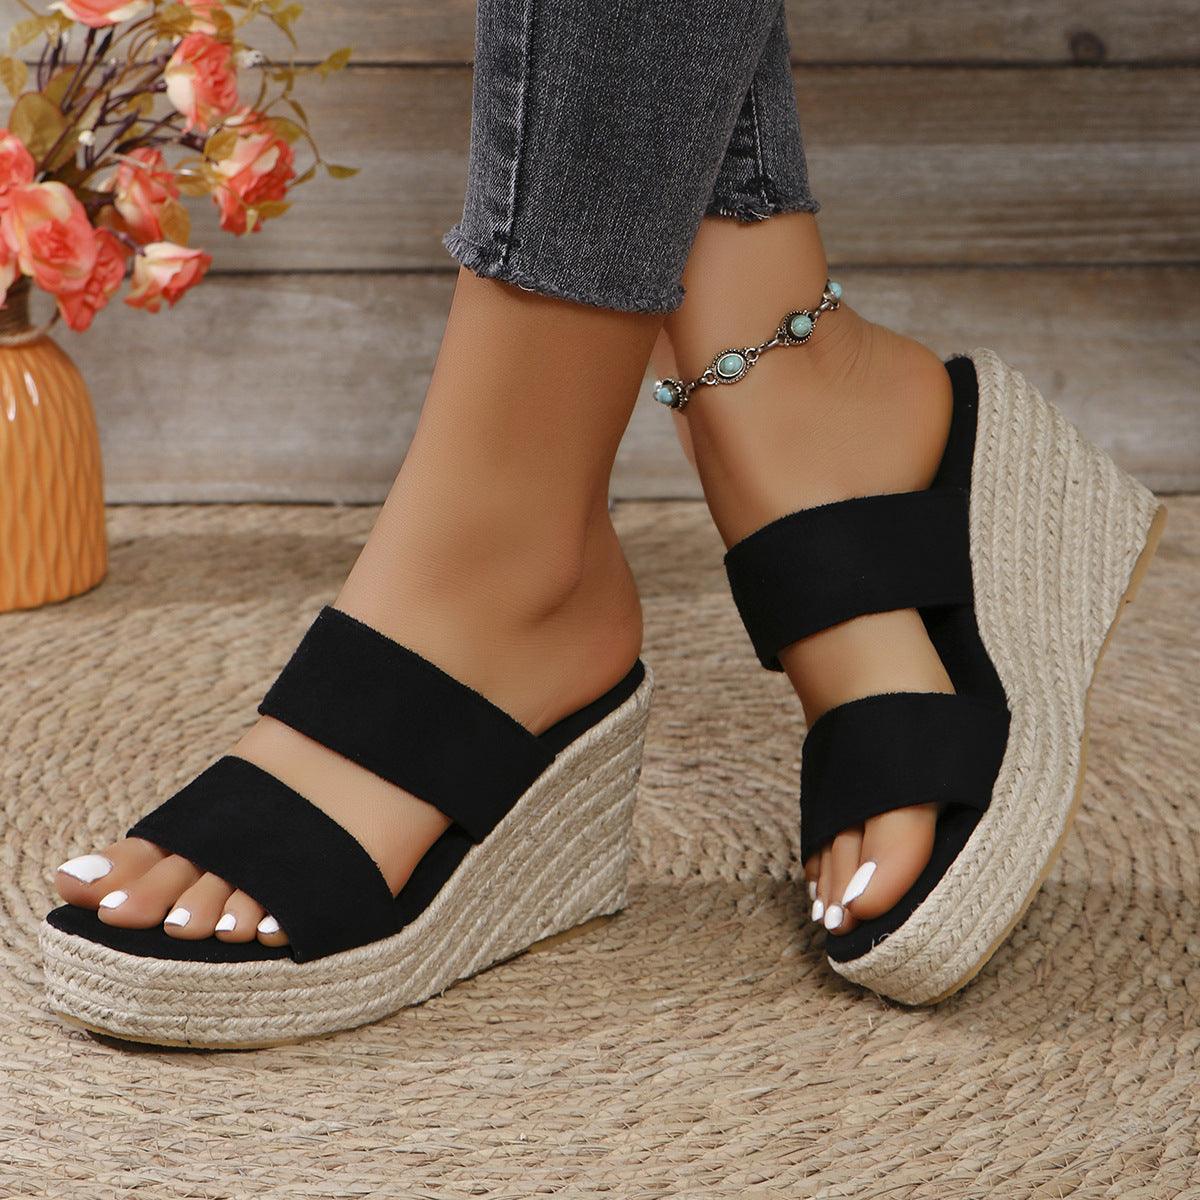 Women's Shoes - Sandals Open Toe Wedge Sandals